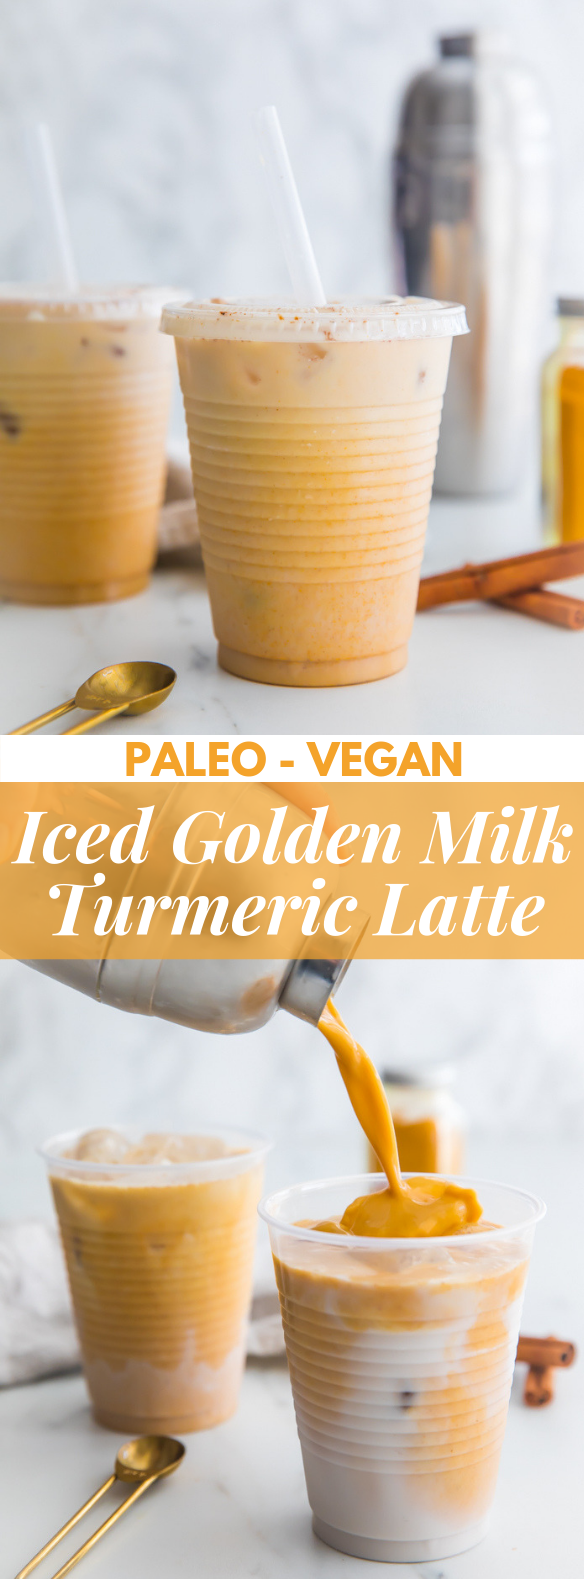 Iced Golden Milk Turmeric Latte (Paleo, Vegan, Anti-Inflammatory) #healthydrink #icedrink